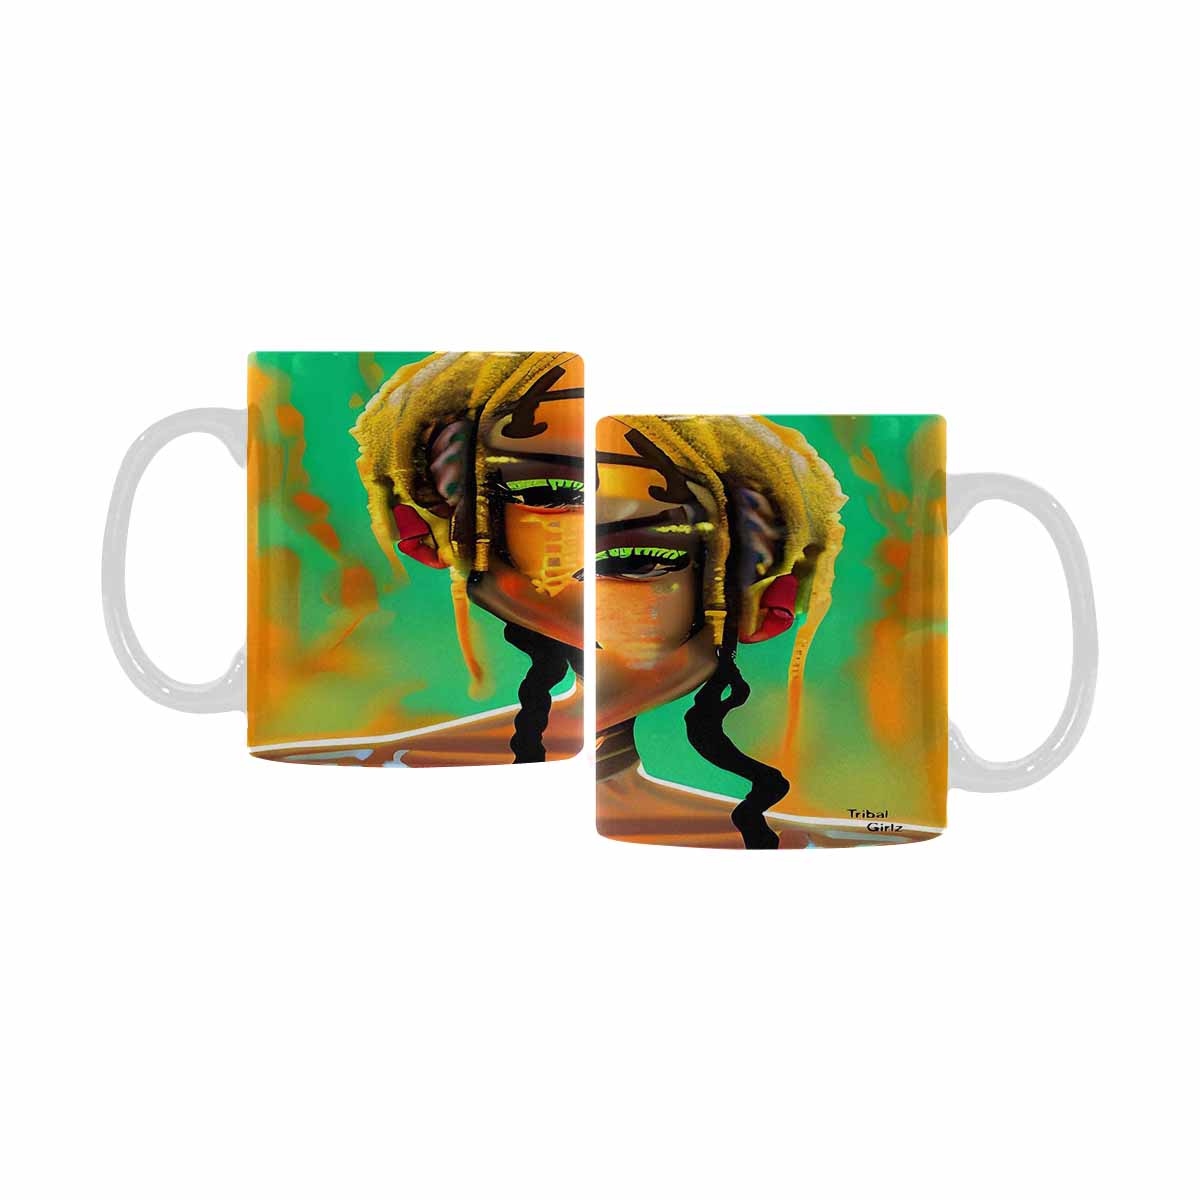 Dreads & Braids, coffee mug, african tribalgirlz Fulangiara 41